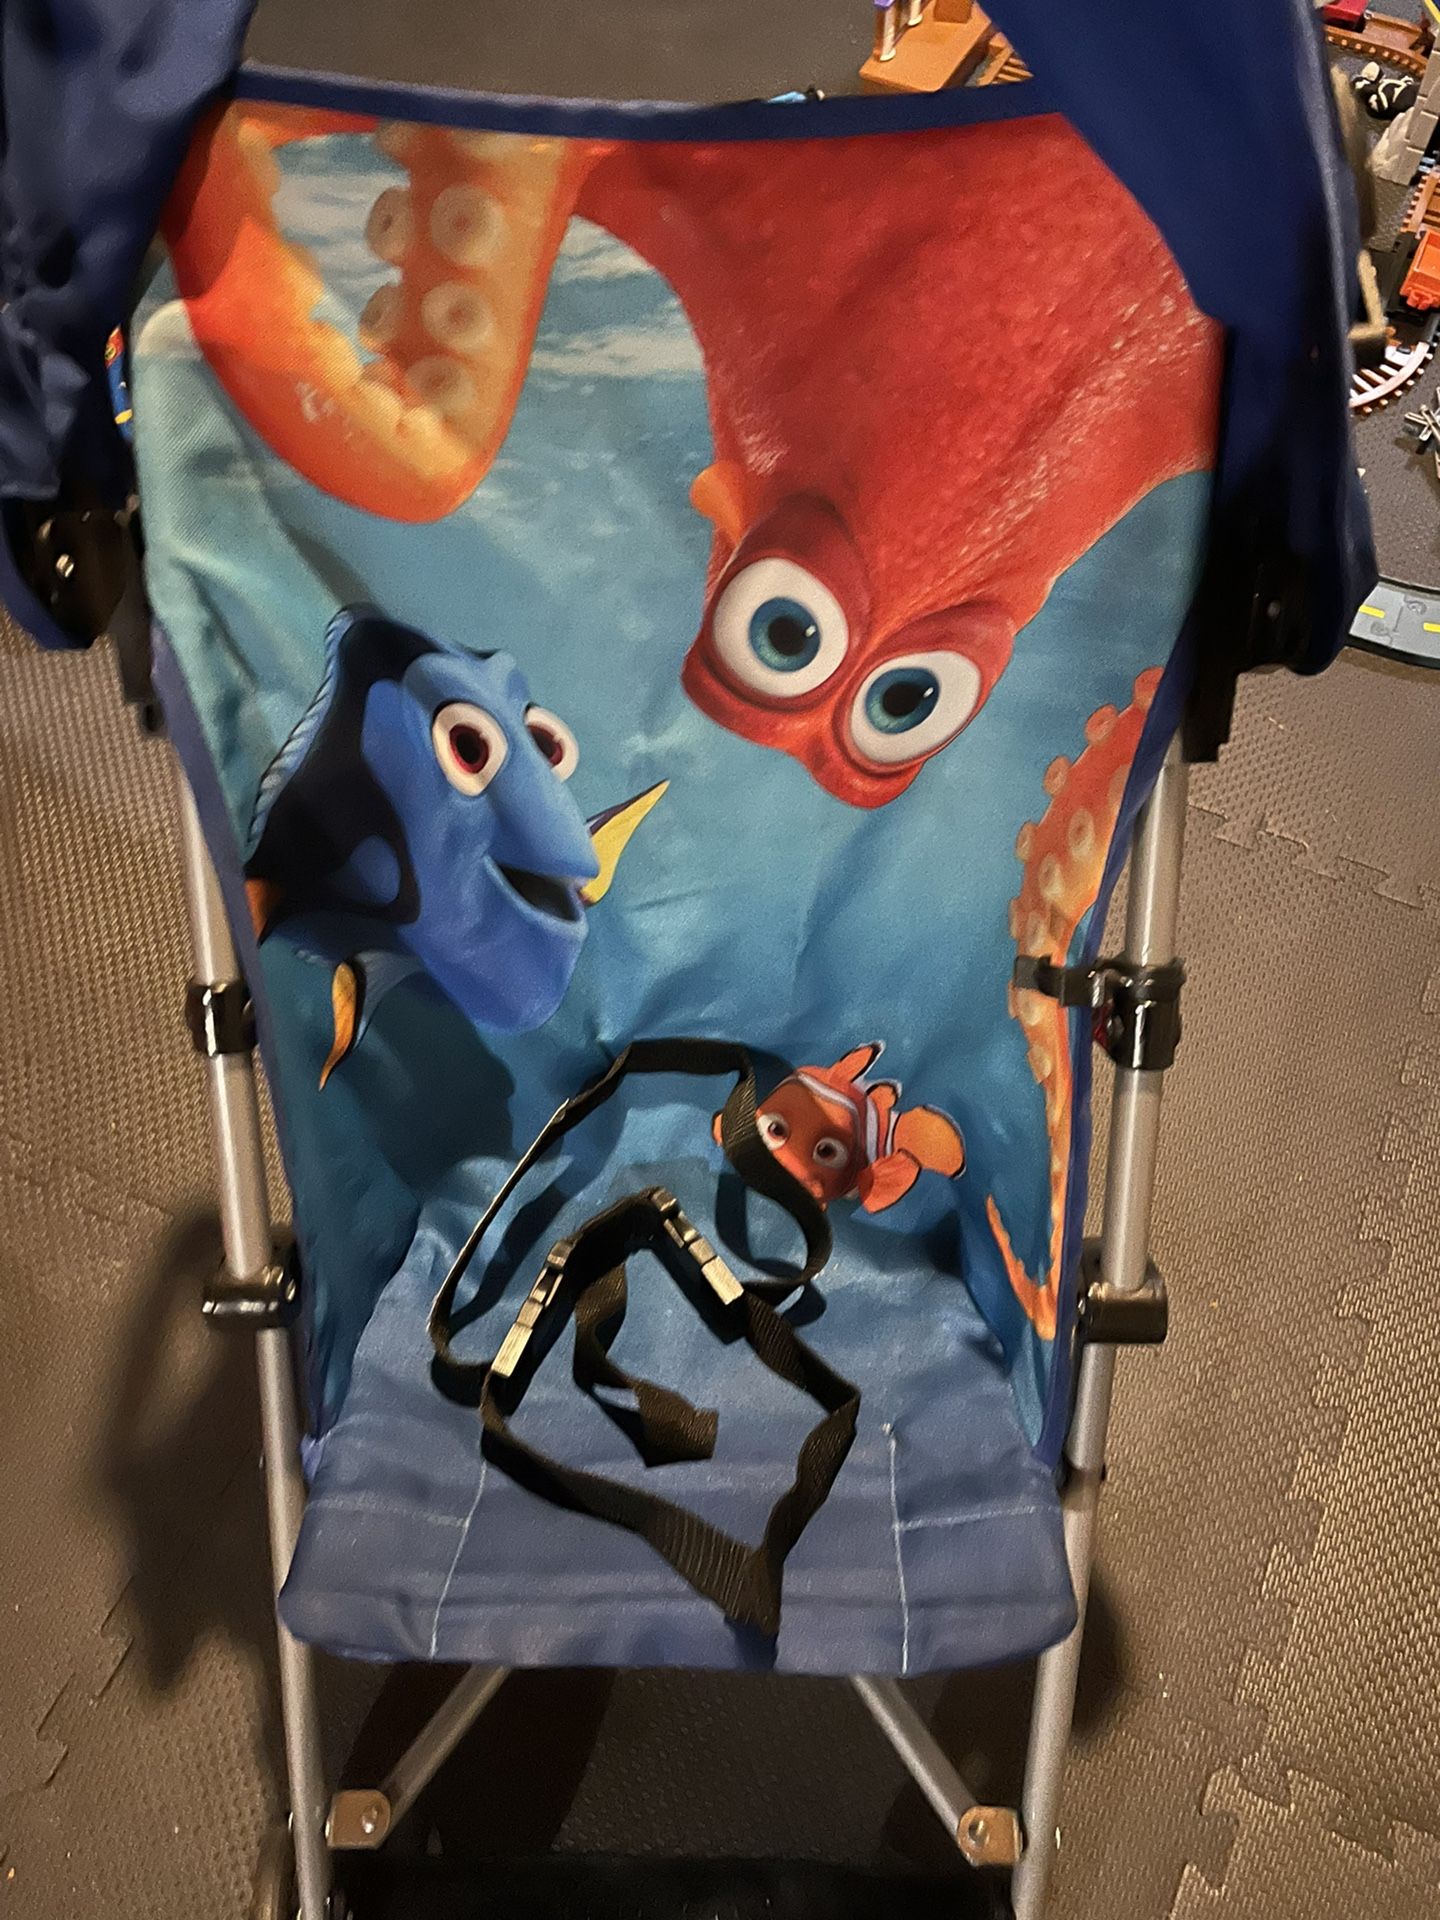 Finding Nemo Umbrella Stroller